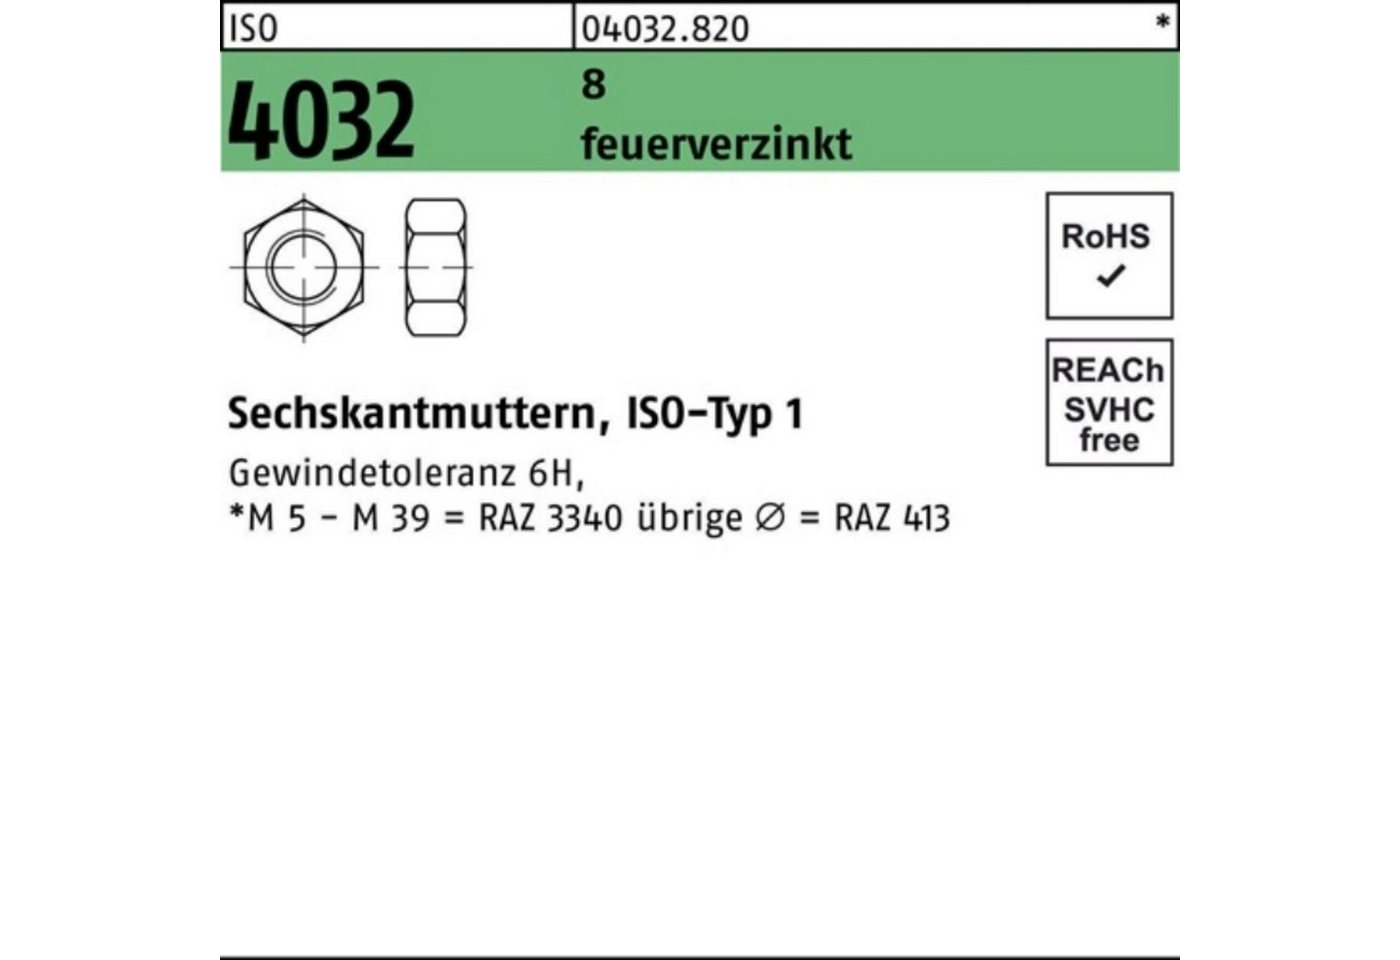 Bufab Muttern 100er Pack Sechskantmutter ISO 4032 M18 8 feuerverz. 50 Stück ISO 403 von Bufab